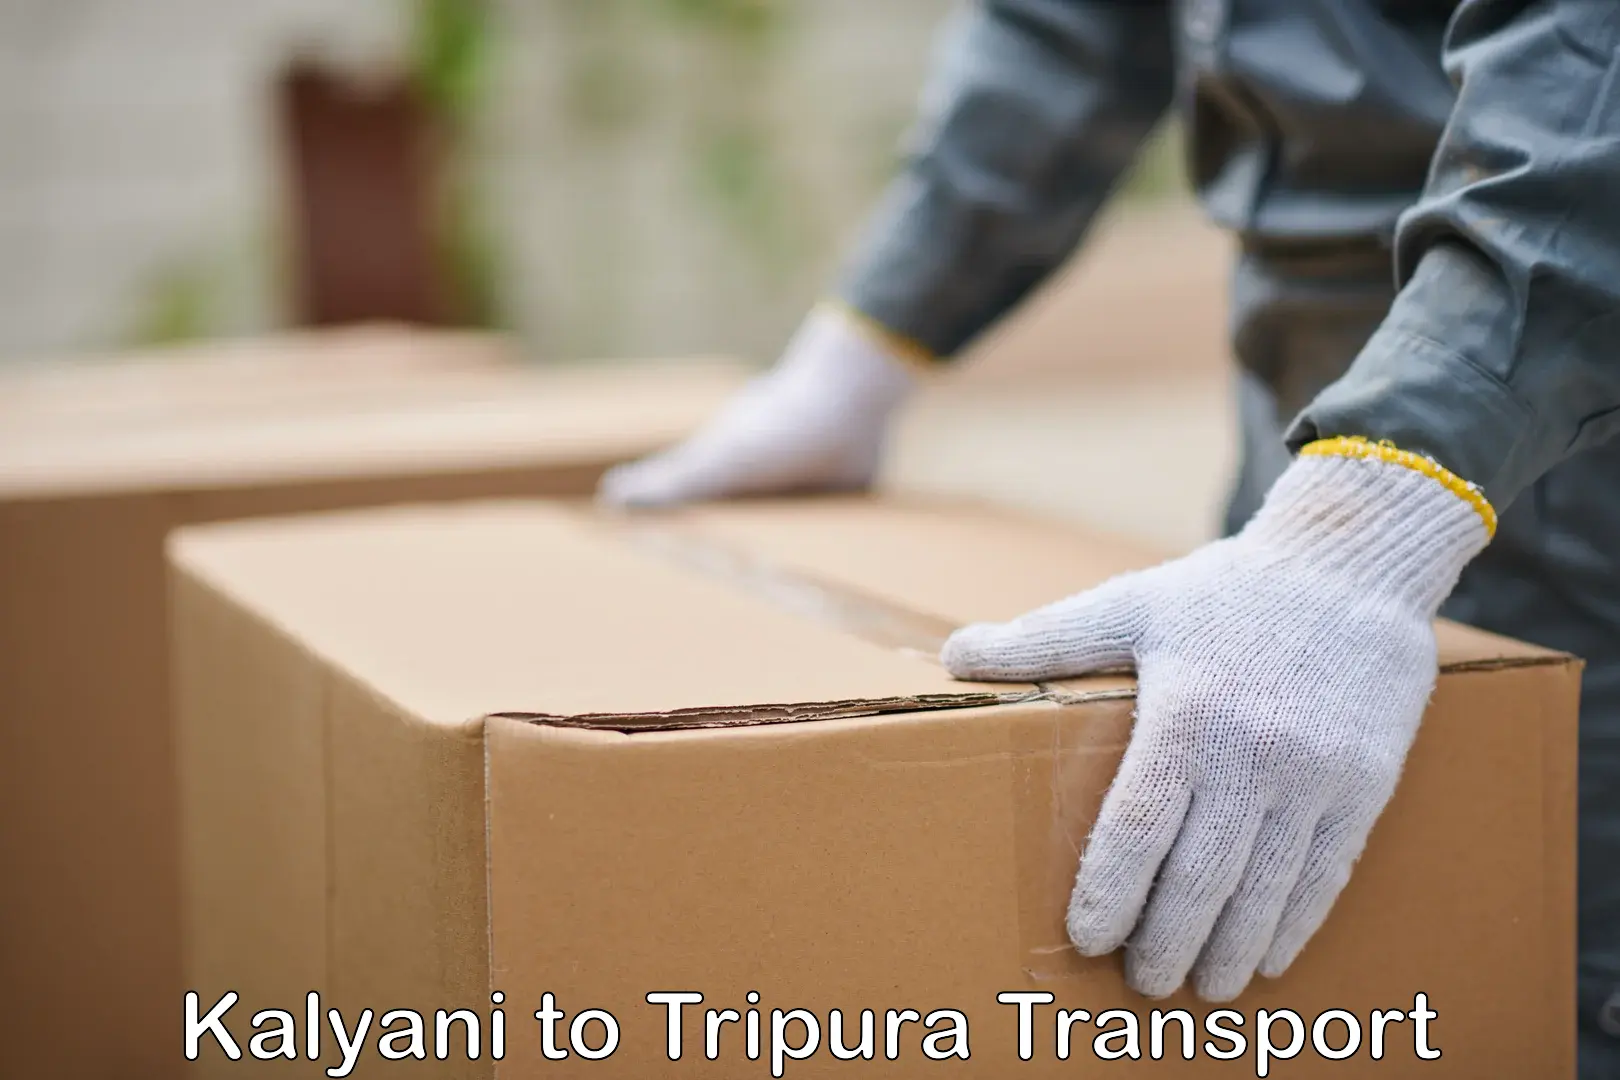 Road transport services in Kalyani to Agartala